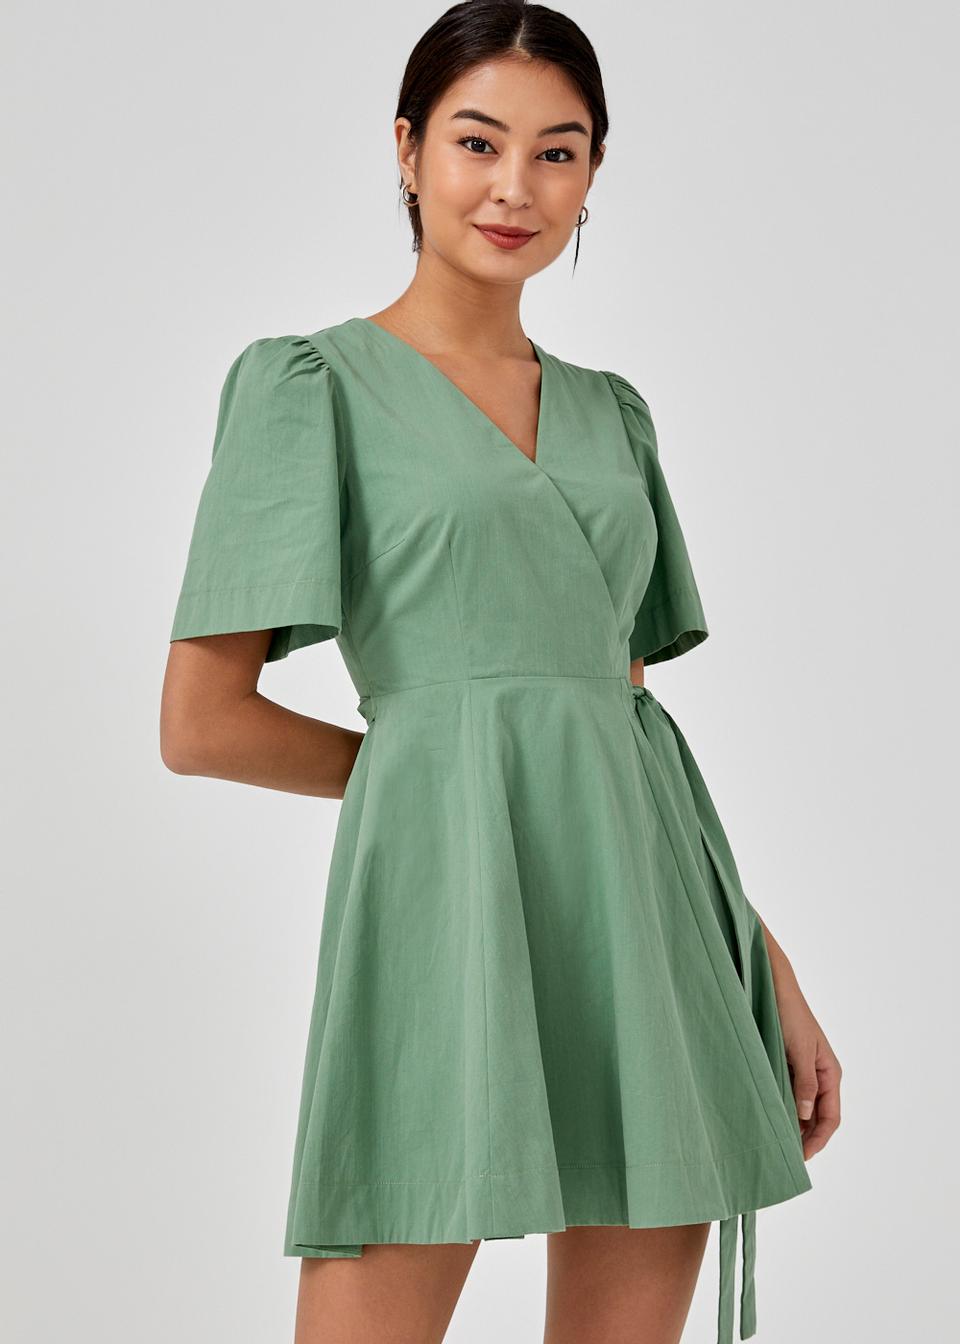 Buy Malvina Textured Wrap Dress @ Love, Bonito Singapore | Shop Women's ...